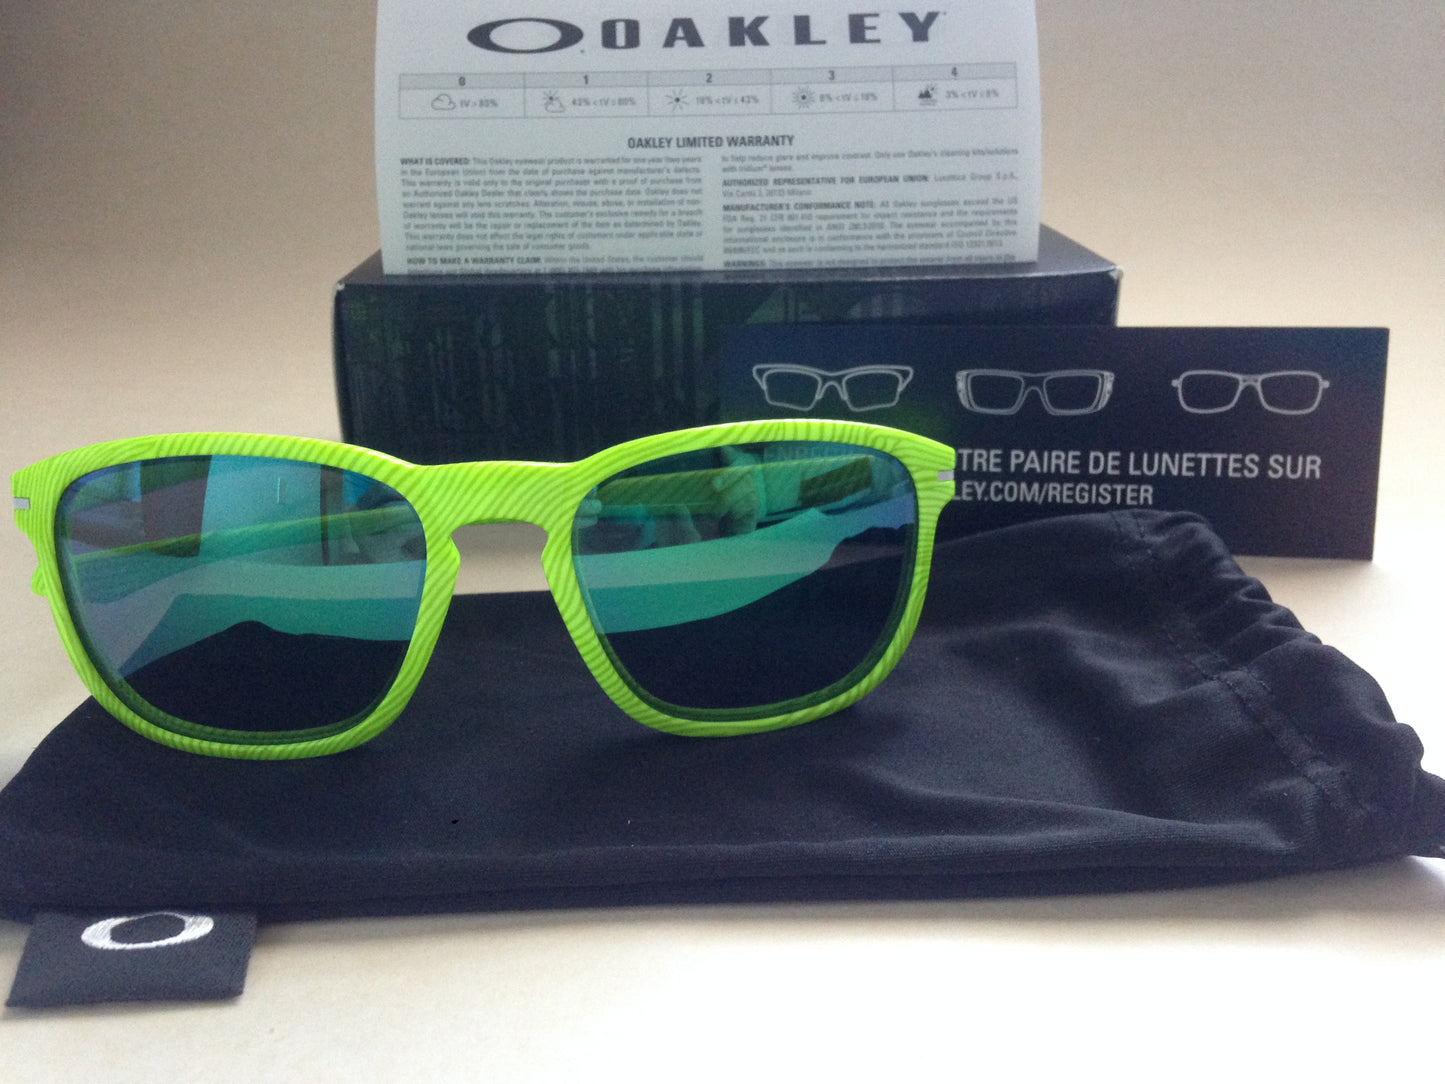 Oakley Enduro Oo9223-25 Sport Sunglasses Fingerprint Green Jade Iridium Mirror Lens - Sunglasses